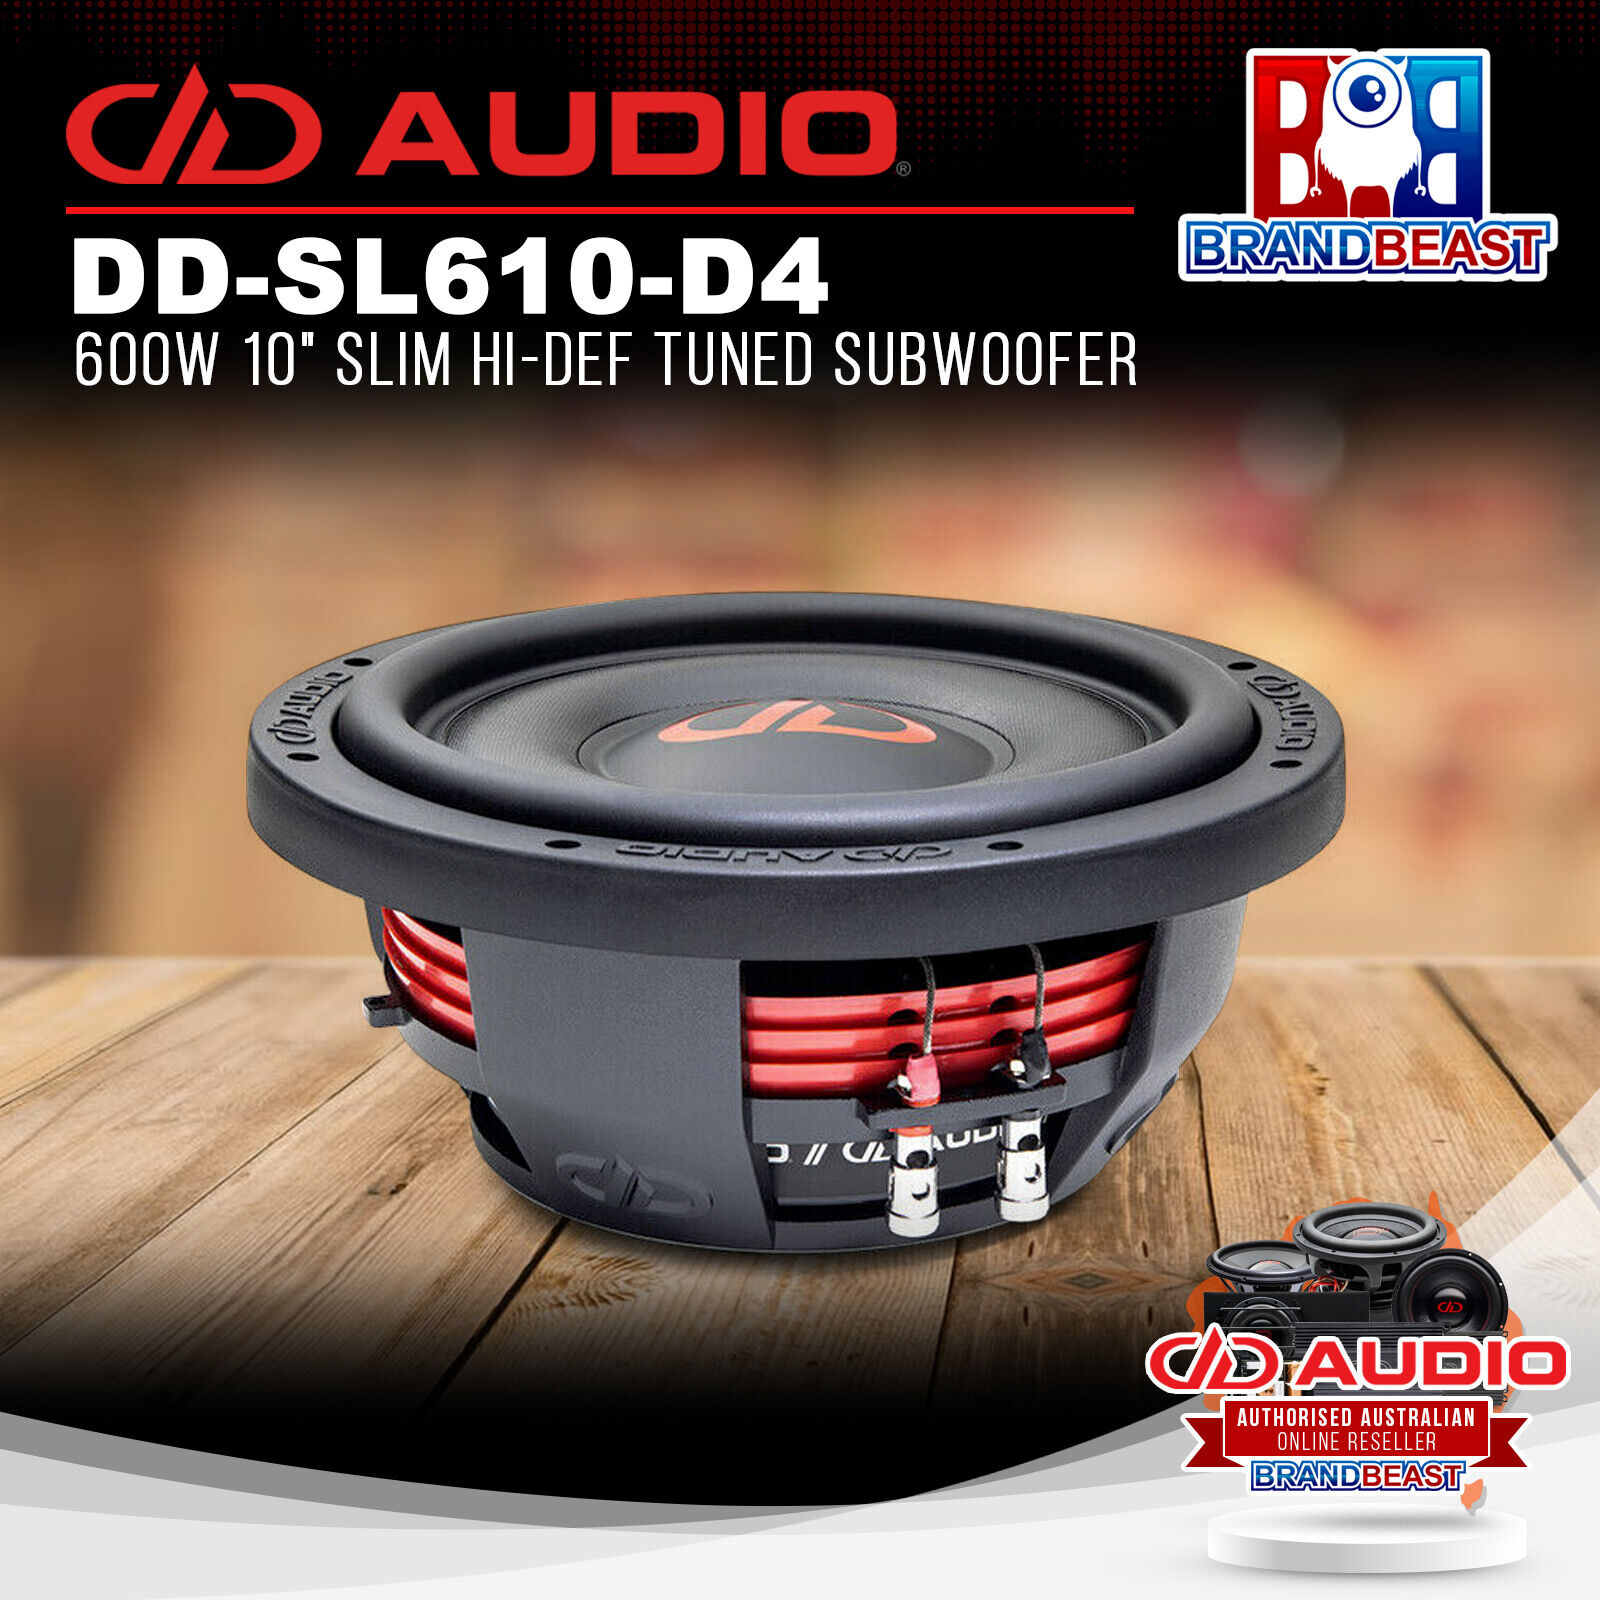 New DD AUDIO SL600 Series Shallow Subwoofers - DD Audio